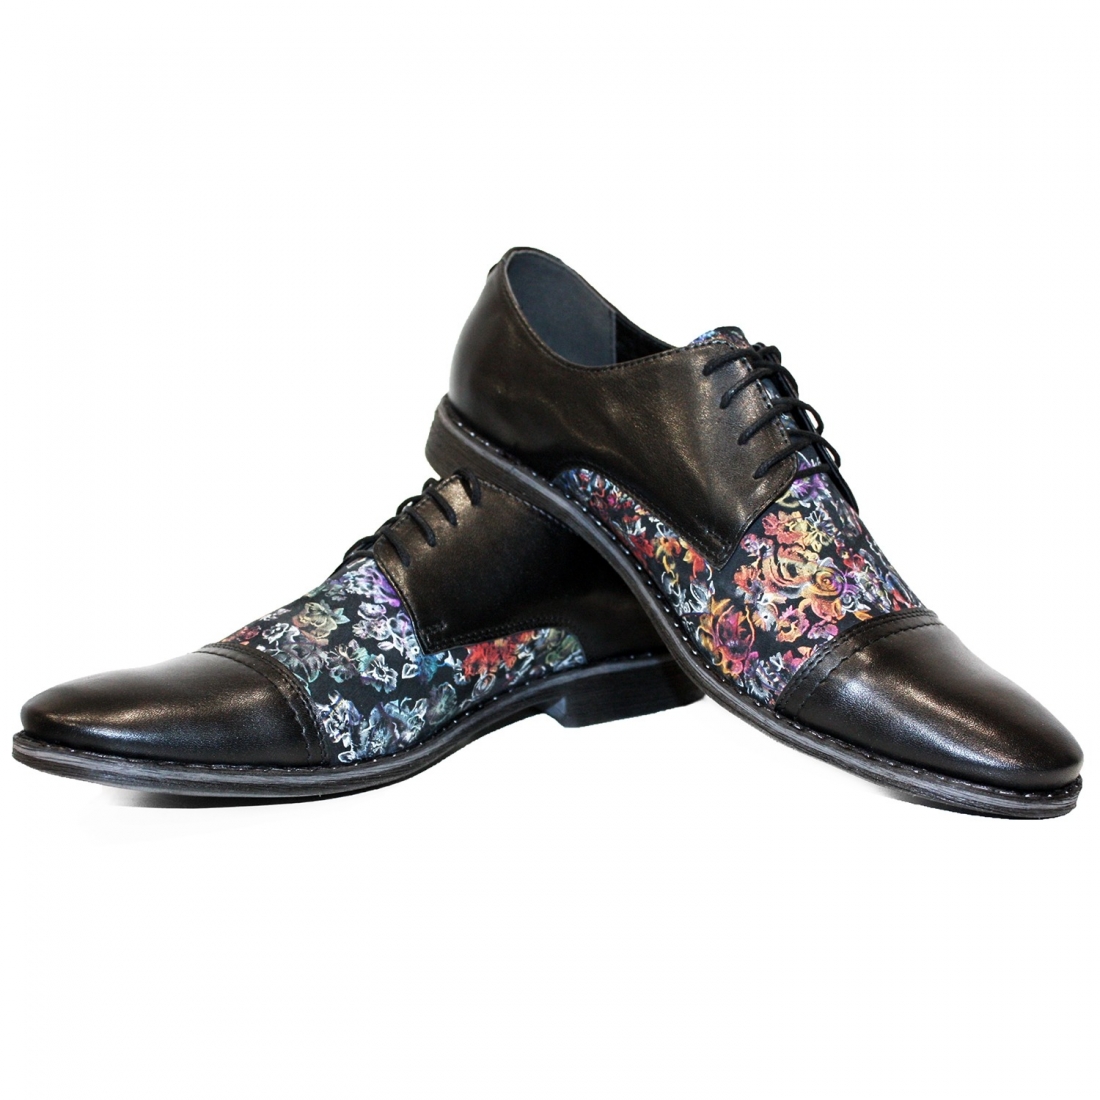 Modello Nusherro - Classic Shoes - Handmade Colorful Italian Leather Shoes